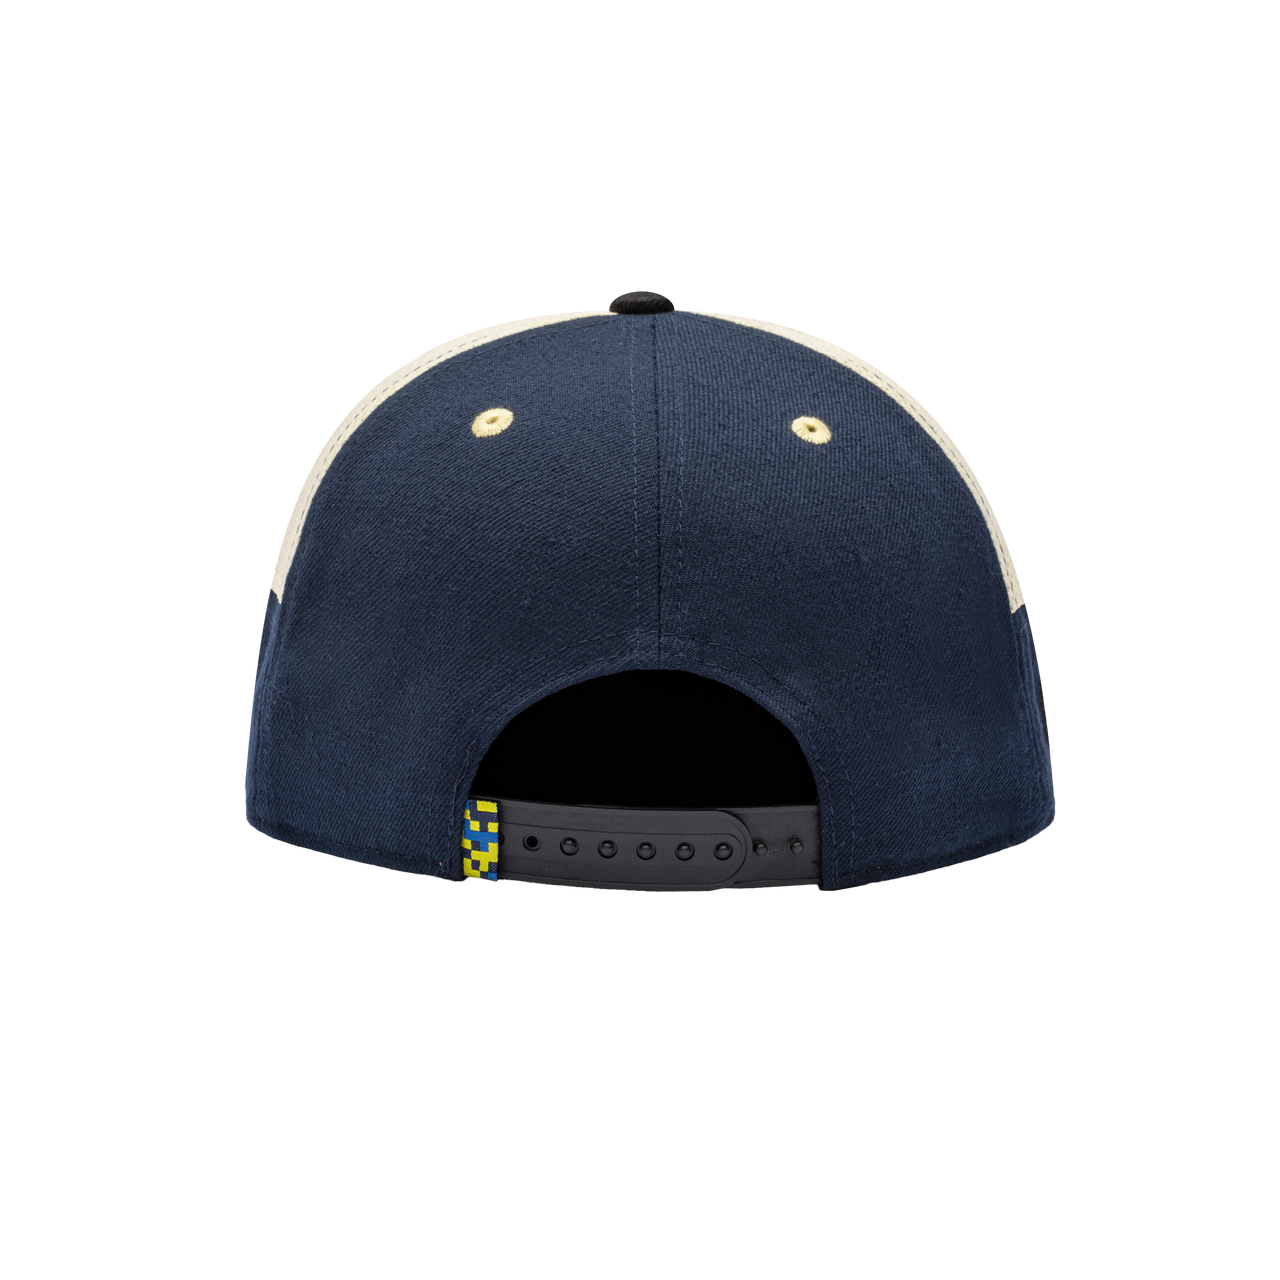 Club America 'Mondrian' Adjustable Snapback Hat - Navy Blue